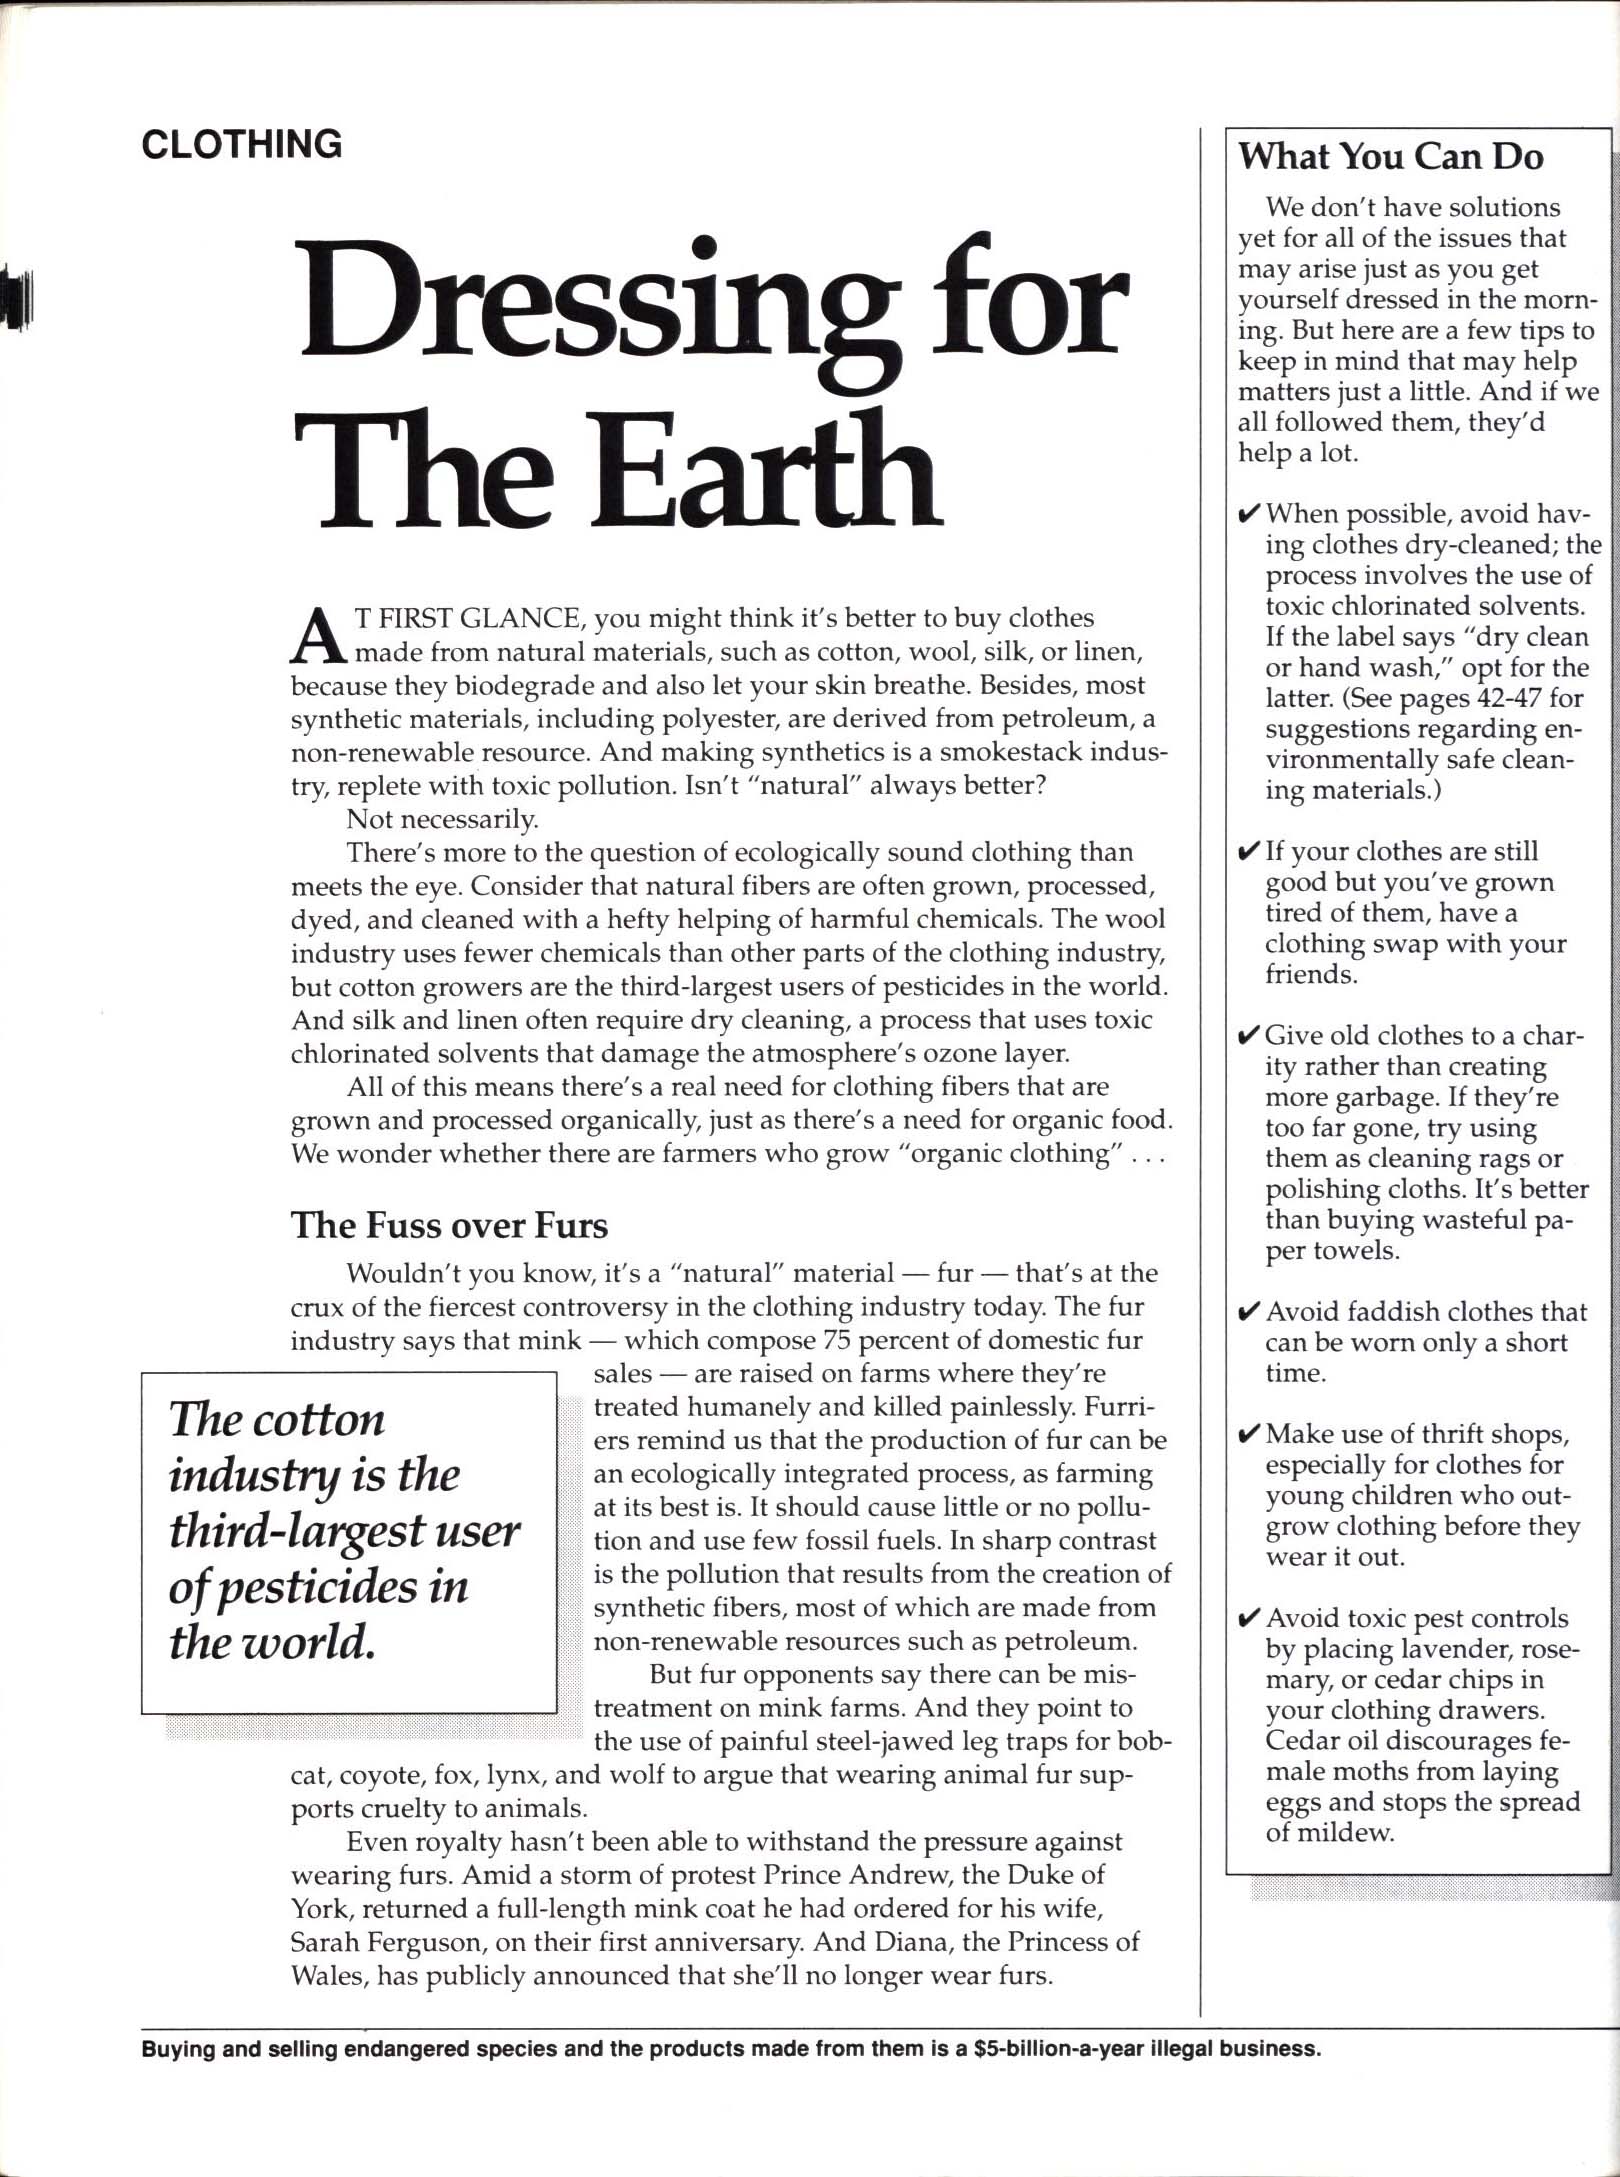 ECOLOGUE: the environmental catalogue and consumer's guide for a safe Earth. prha5282e